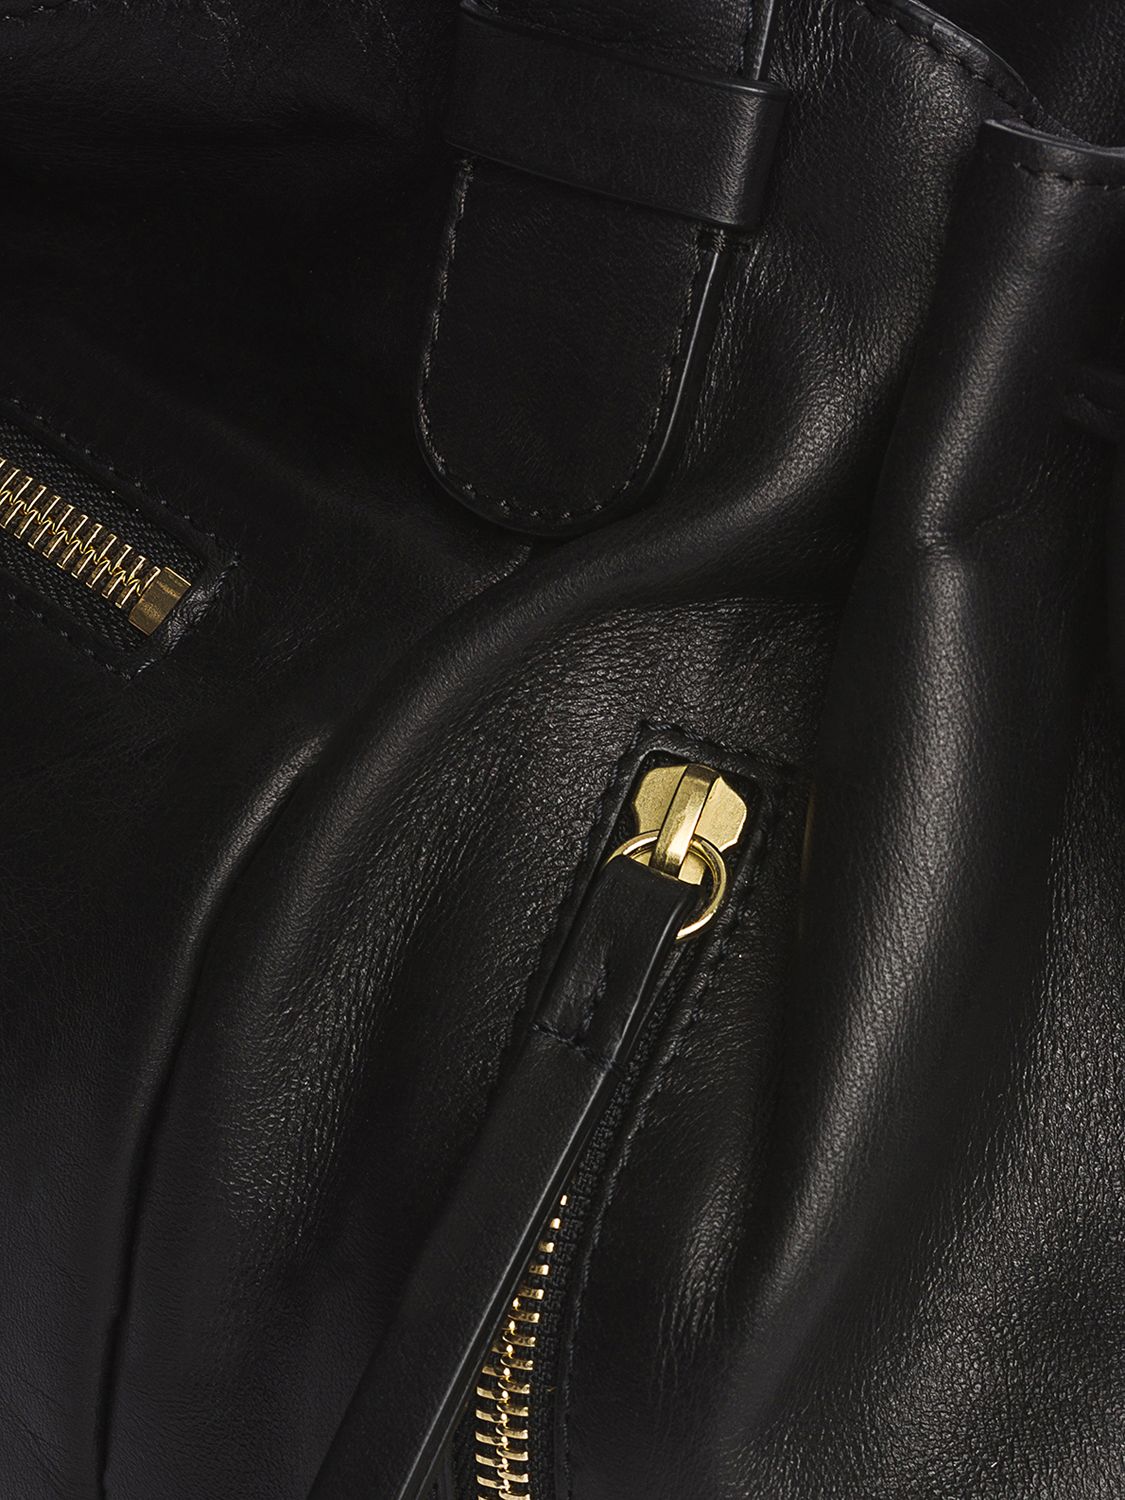 Gerard Darel Rebelle Calfskin Leather Bag, Black at John Lewis & Partners